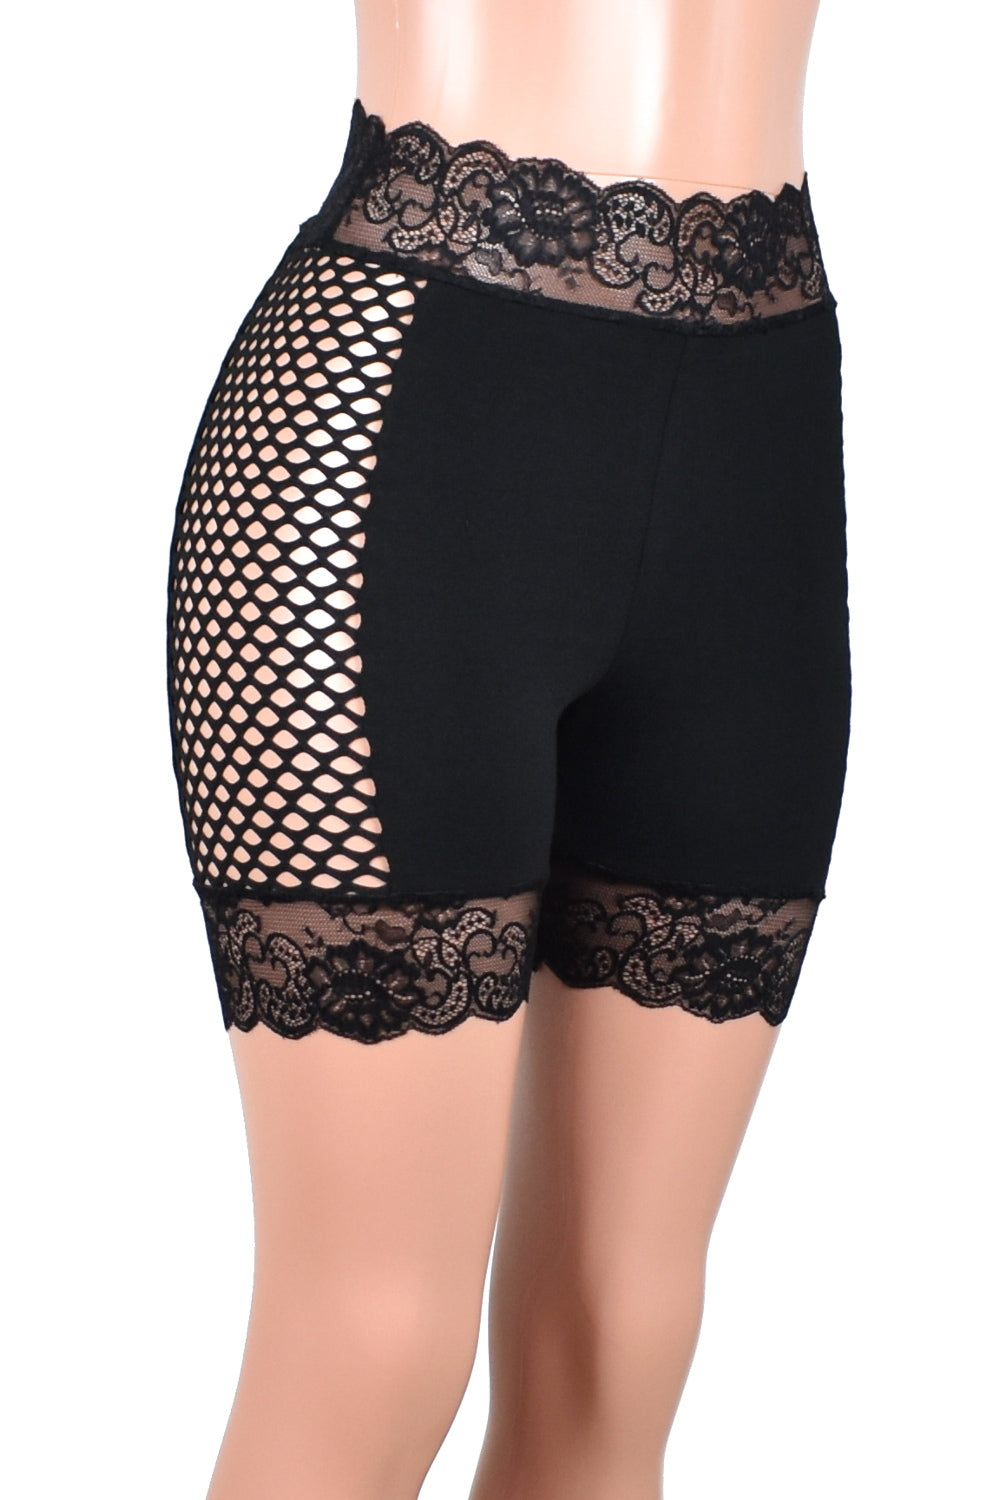 High-Waisted Cabaret Fishnet Side Black Stretch Lace Shorts (5" inseam)